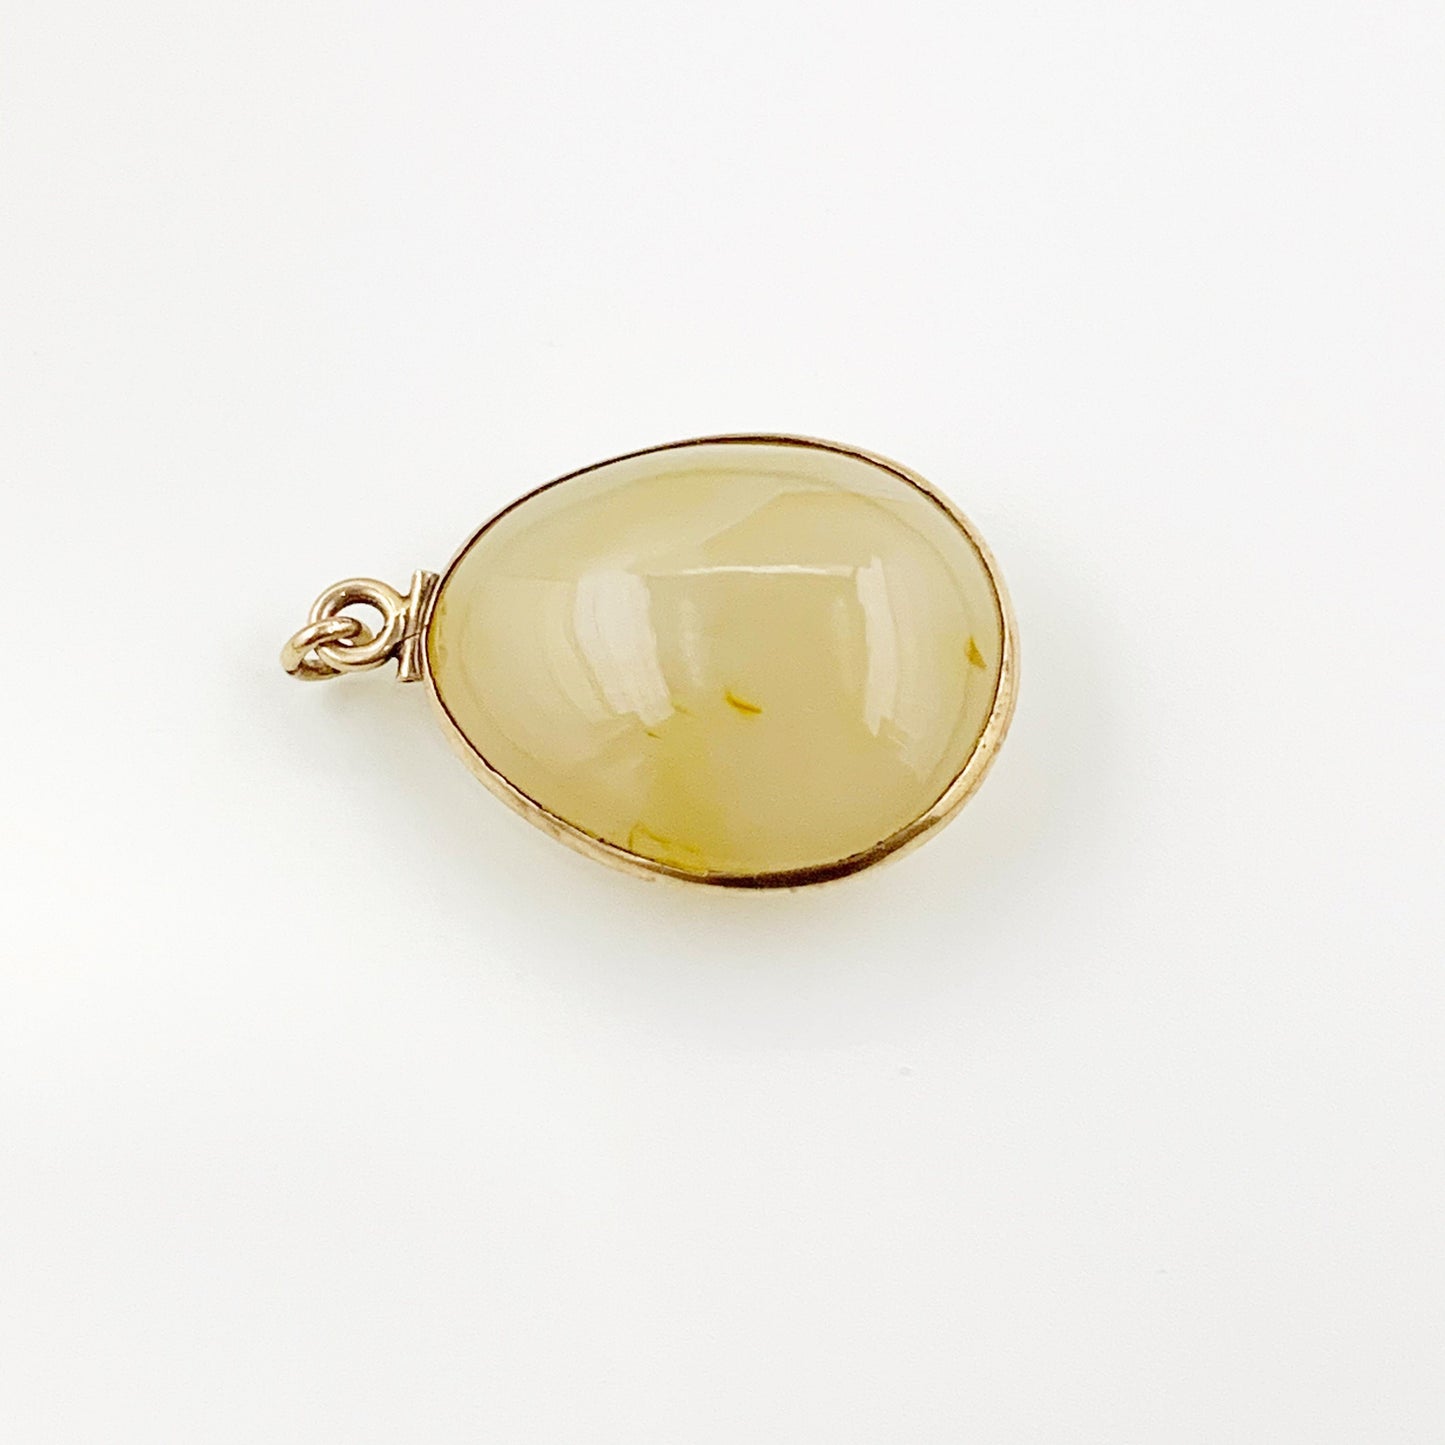 Antique Victorian Yellow Agate 10k Pendant | Agate Fob Charm | Oval Agate Specimen Pendant